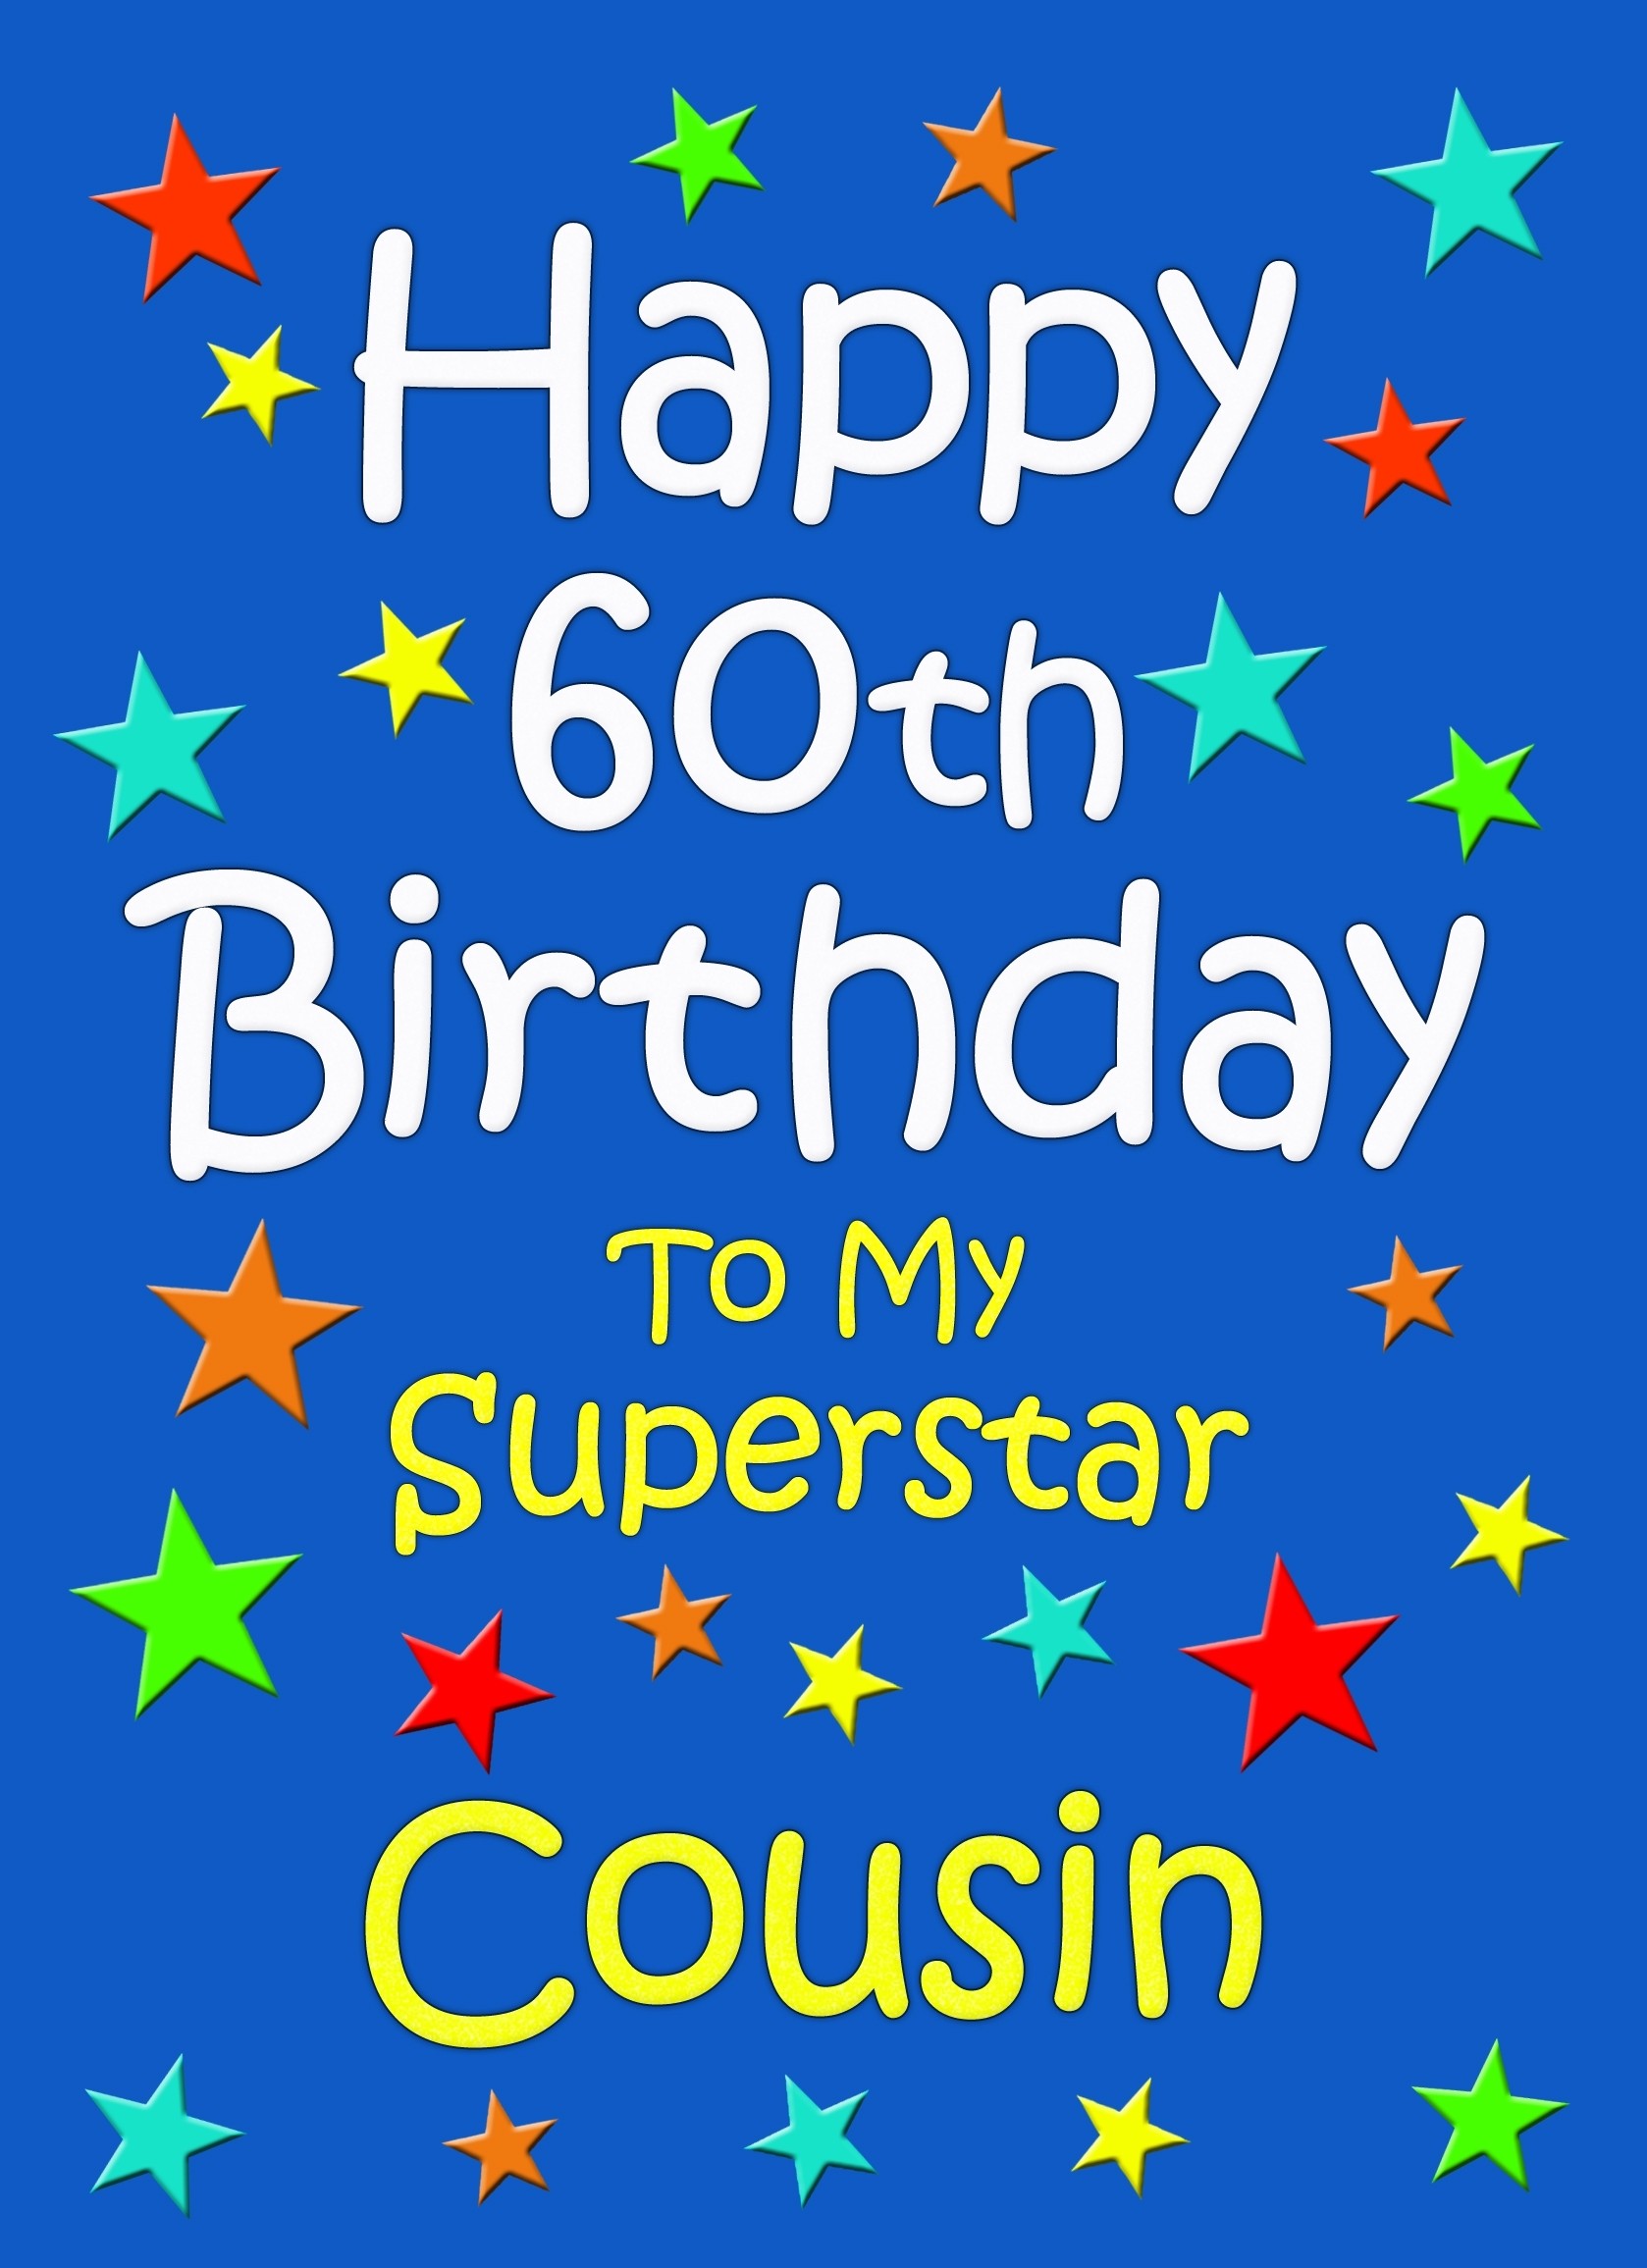 Cousin 60th Birthday Card (Blue)